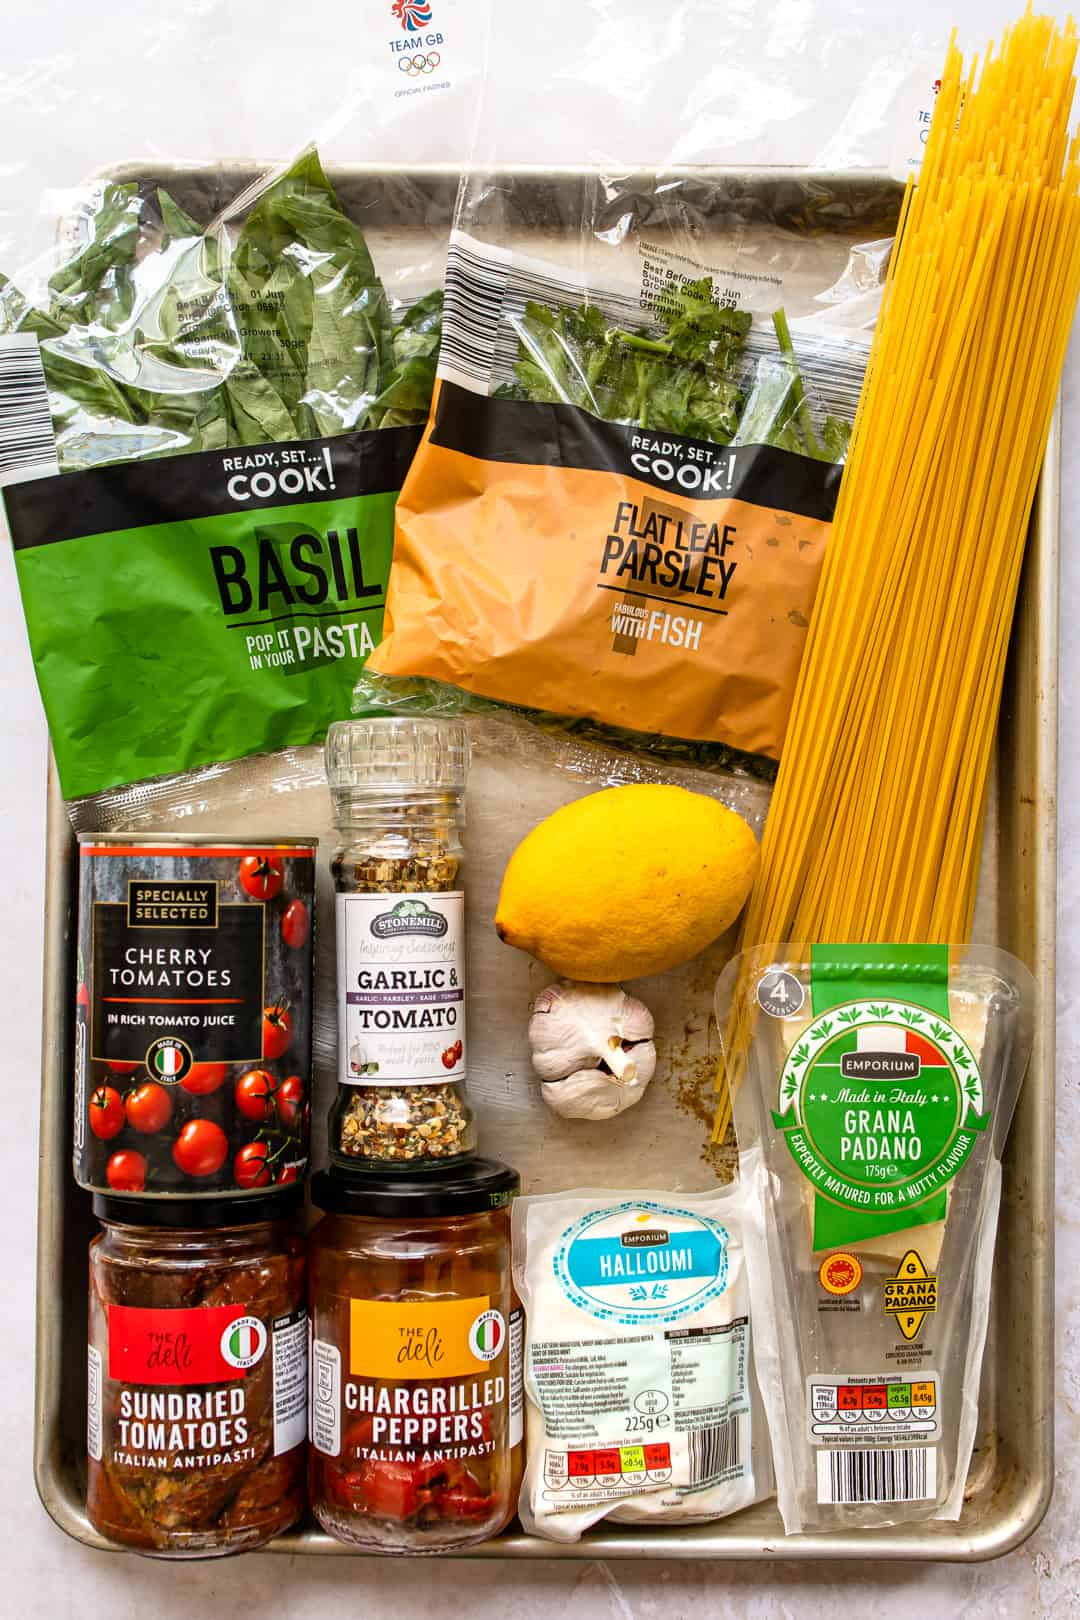 Ingredients for easy halloumi pasta in tomato sauce.